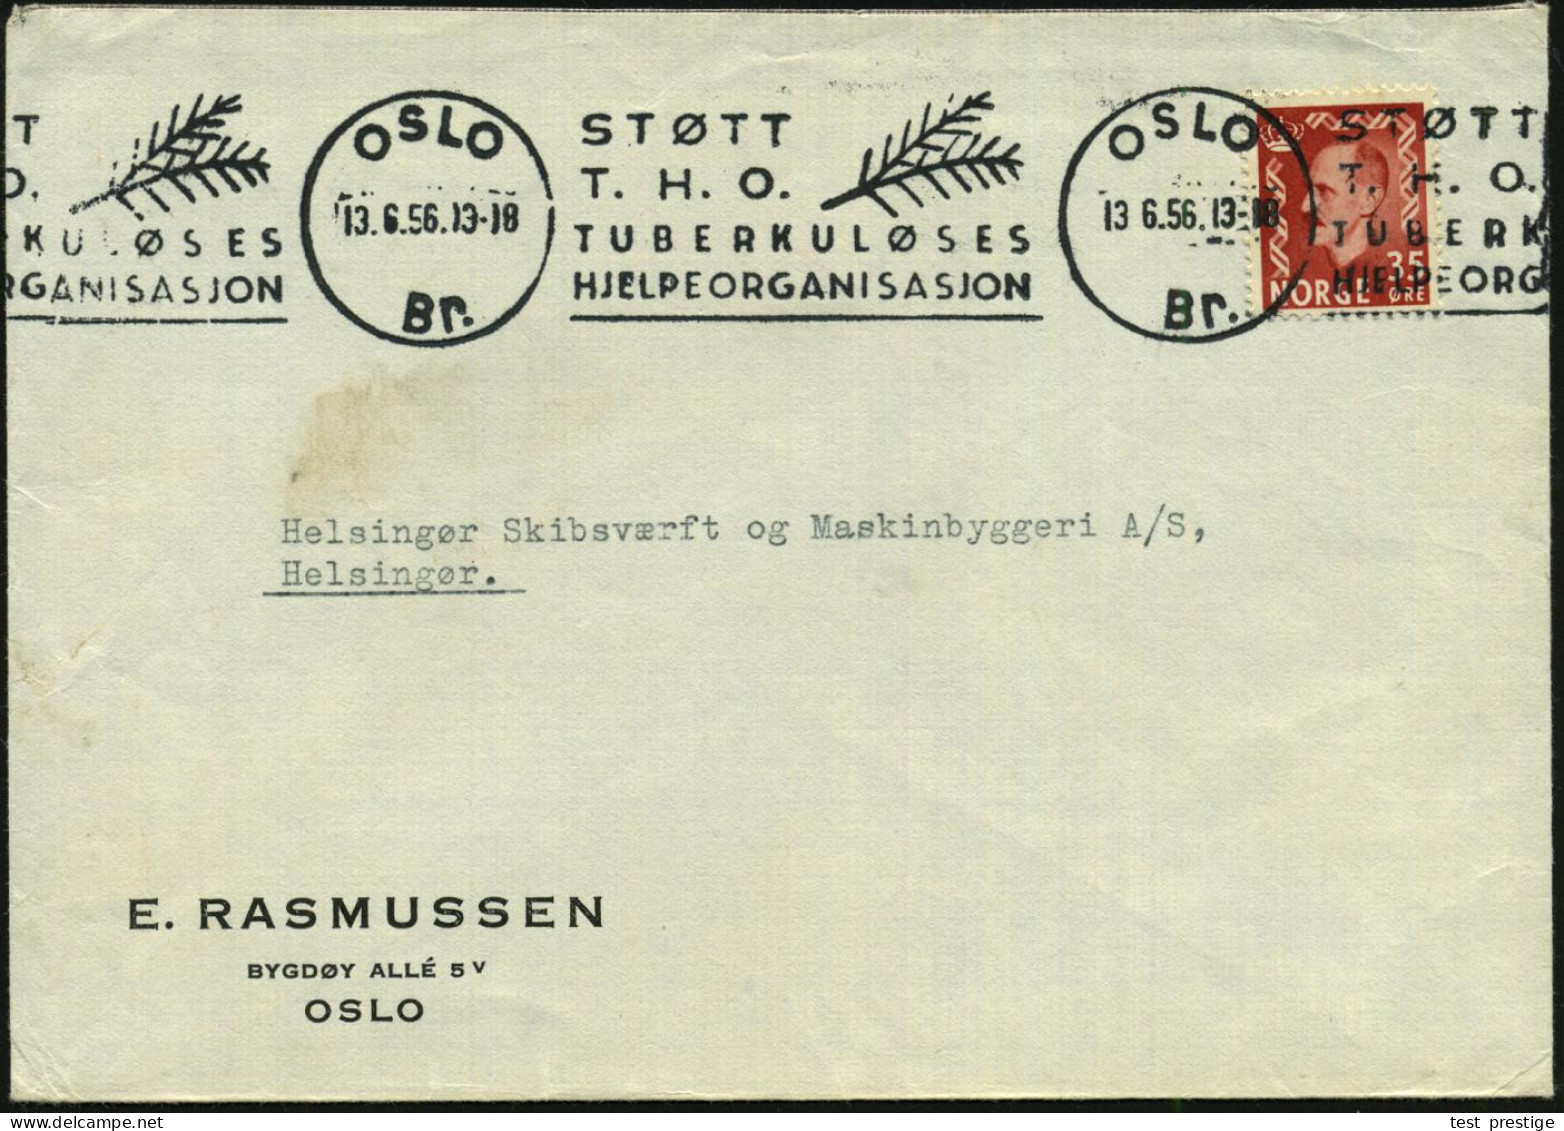 NORWEGEN 1956 (Juni) Band-MWSt: OSLO/Br./STÖTT/T.H.O./TUBERKULÖSES/HJELPEORGANISASJON (Zweig) Klar Gest. Bedarfsbf. - TU - Krankheiten